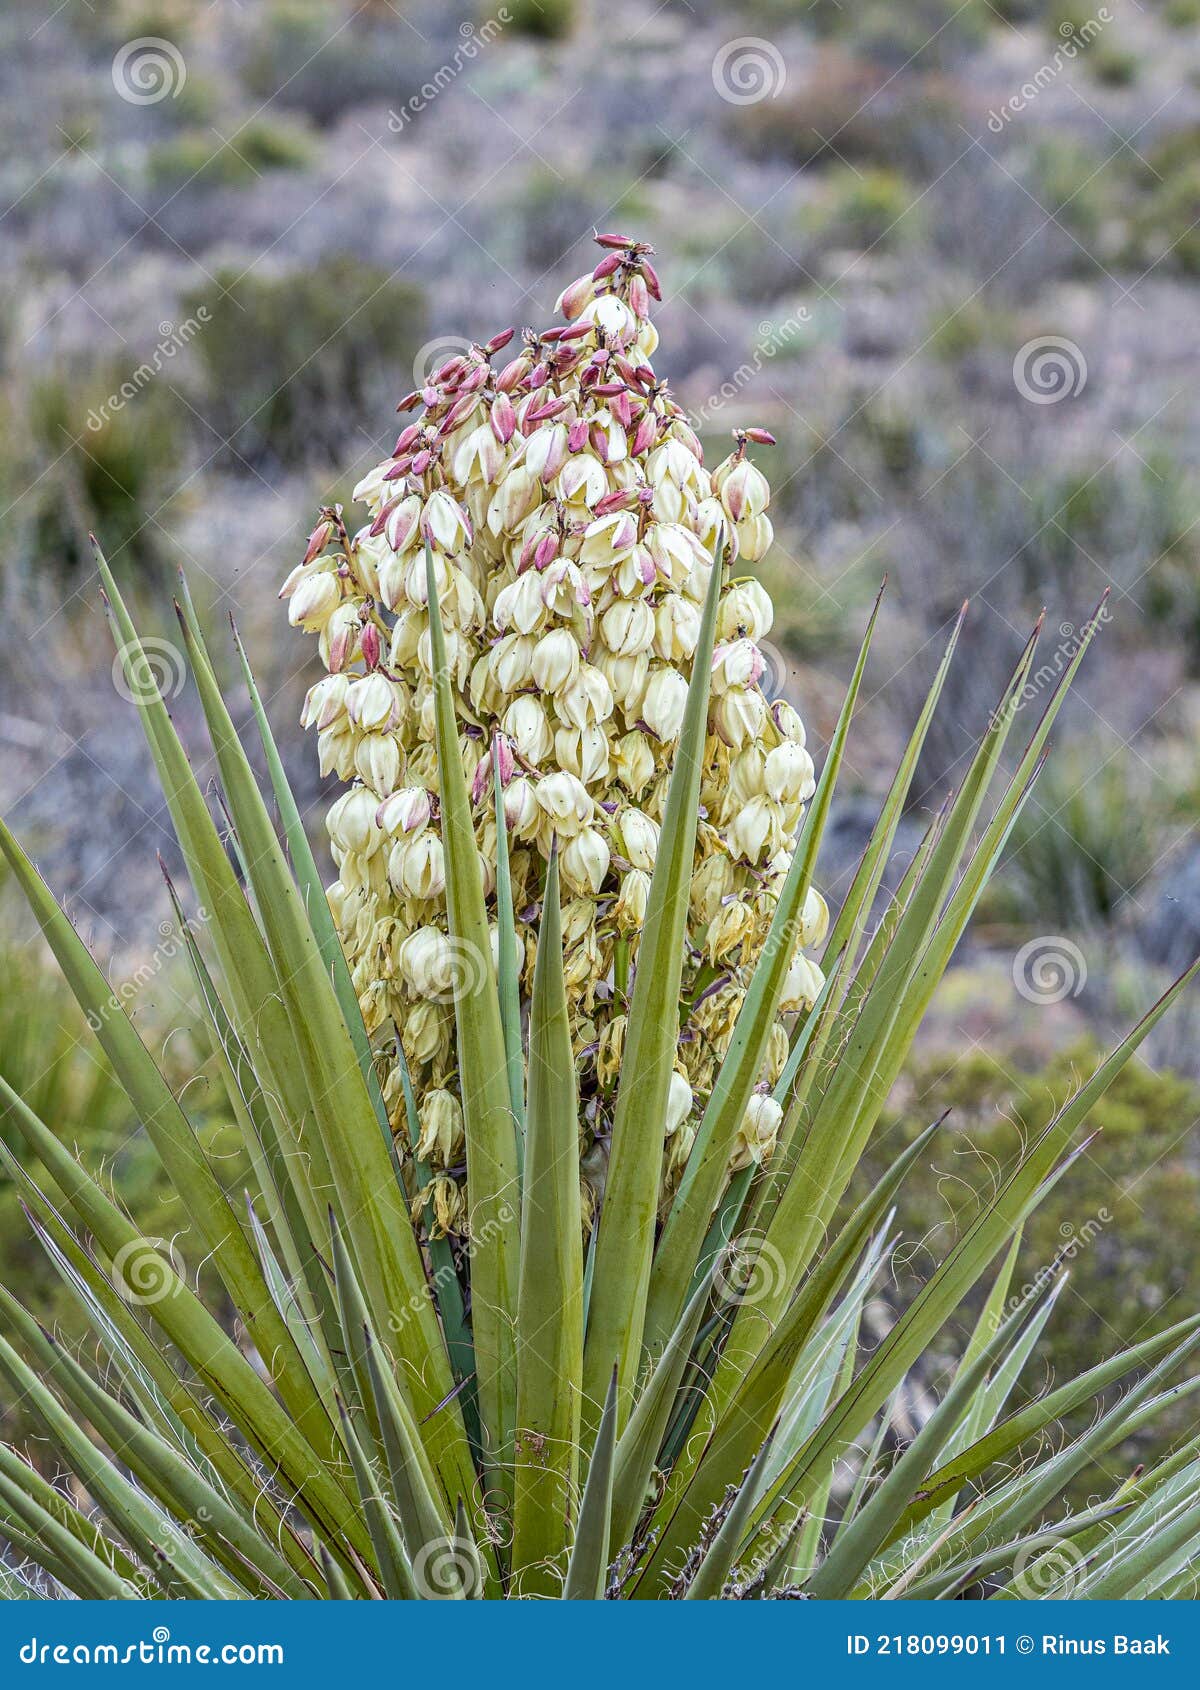 torrey yucca plant in bloom